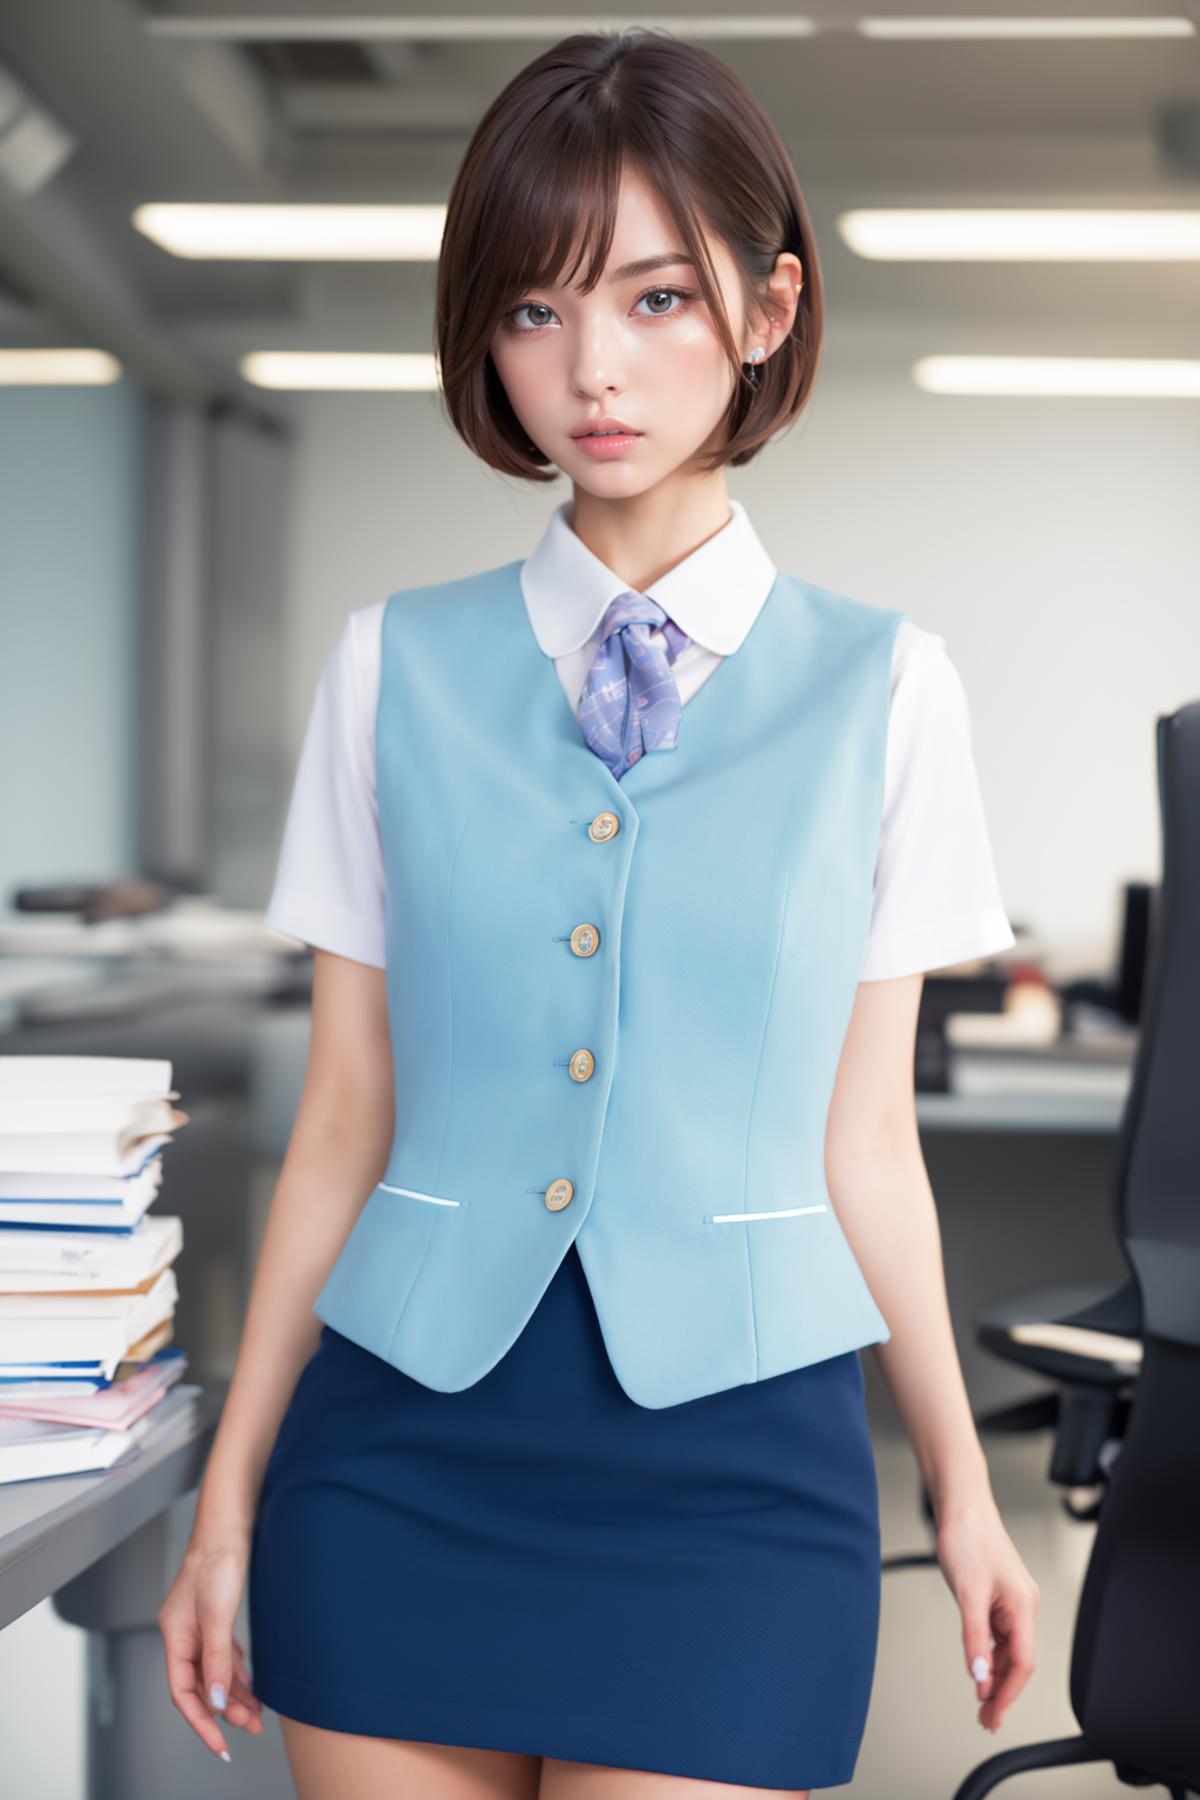 Sexy Office Lady image by Tokugawa